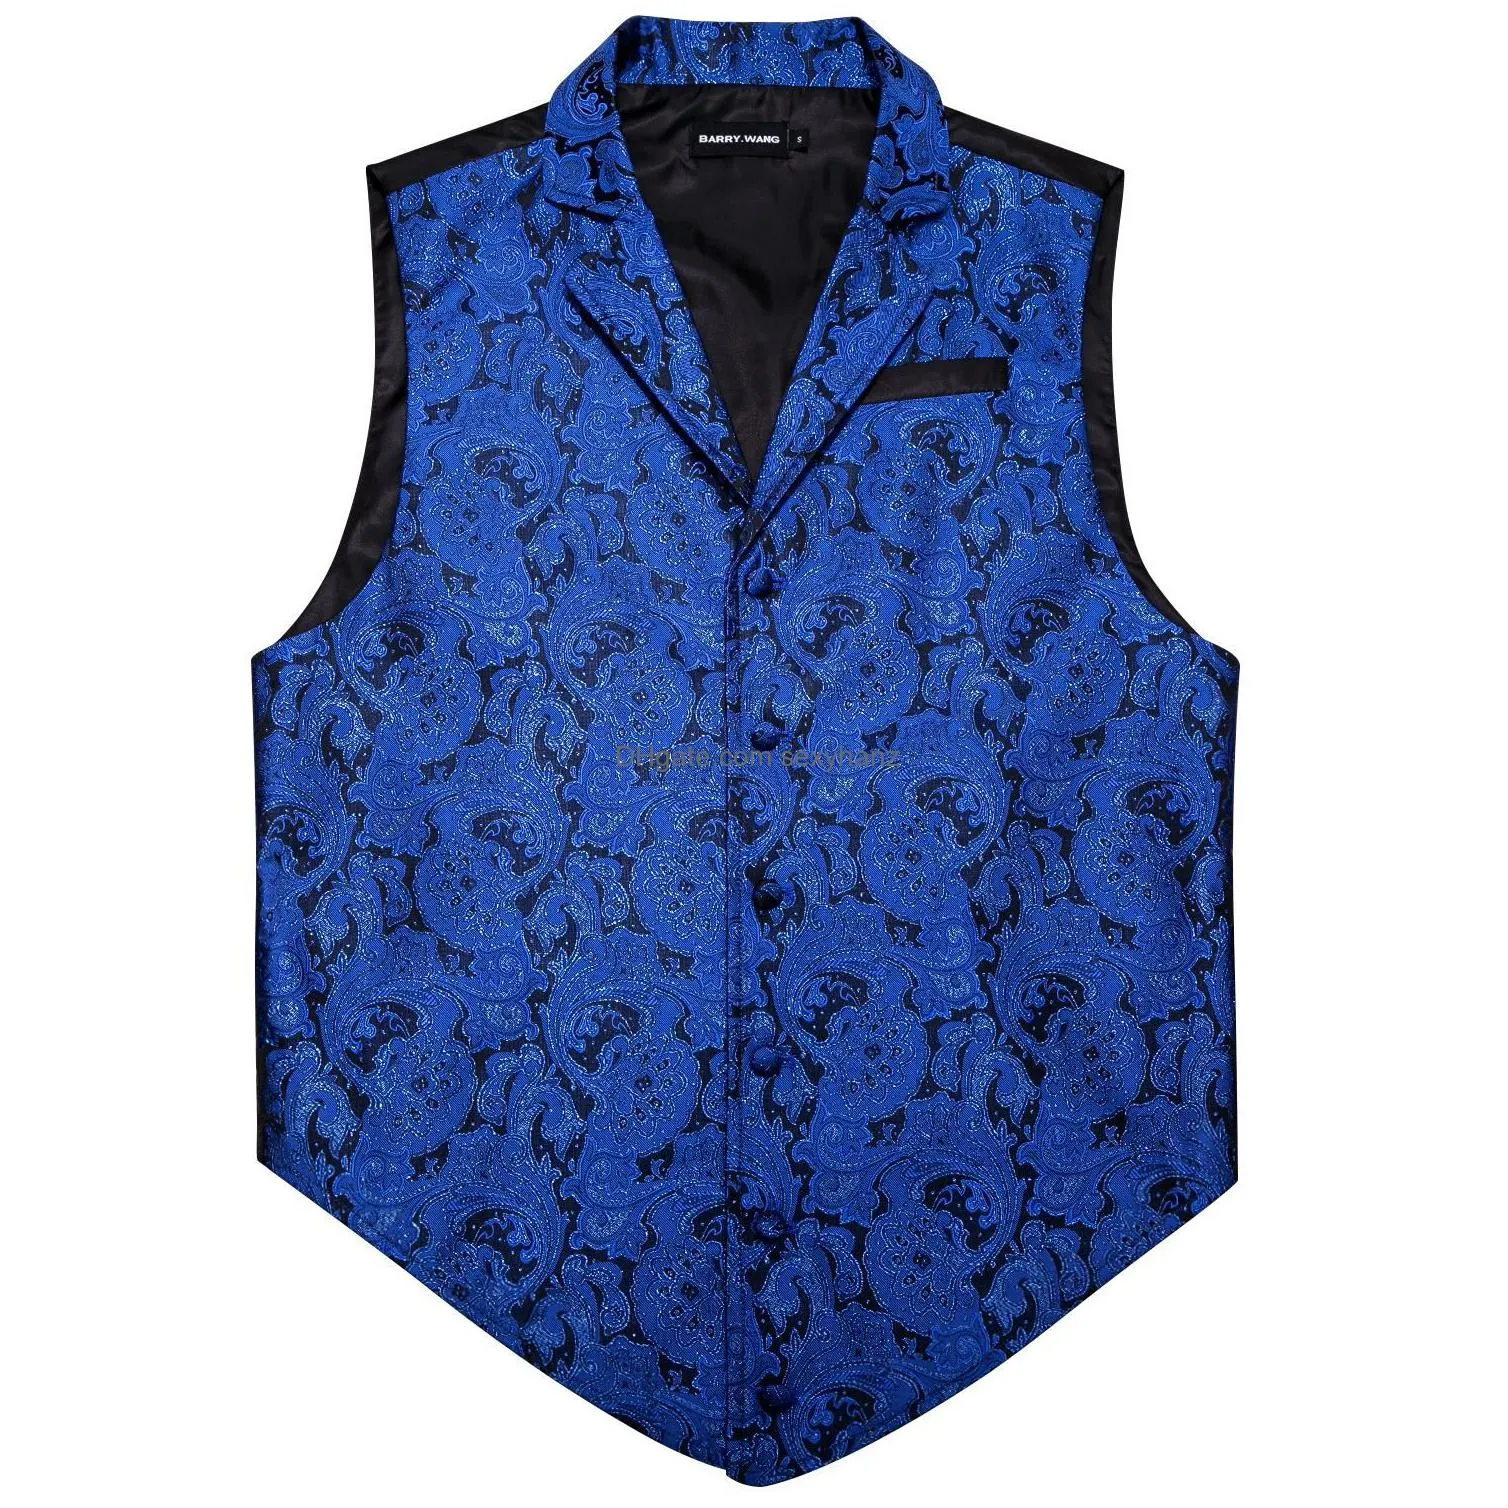 vests blue mens singlebreasted paisly silk waistcoat suit collar arrival autumn mens sleeveless suit vest barry.wang designer